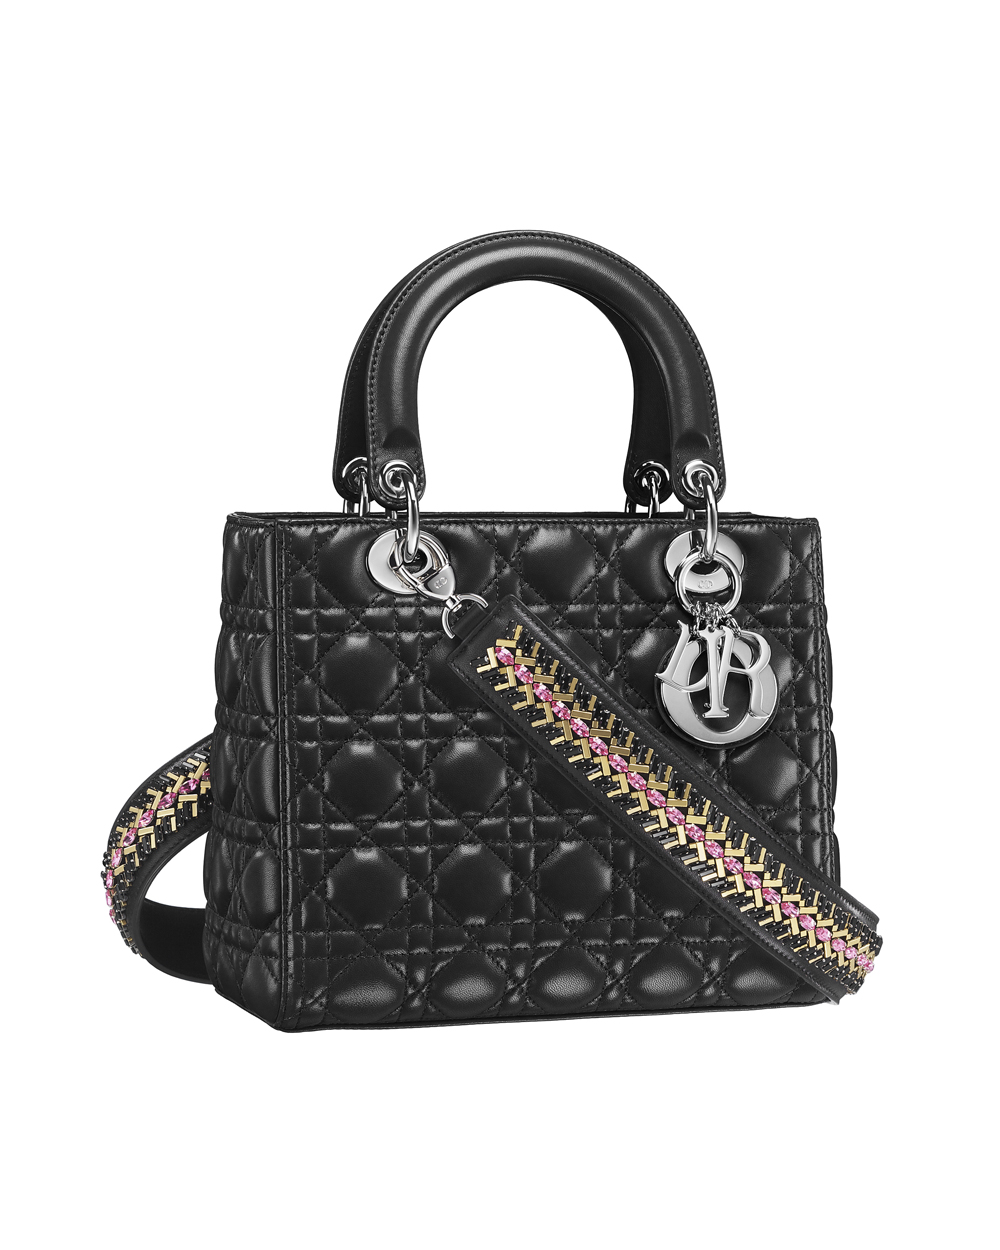 Bag, $8,200, by Christian Dior.